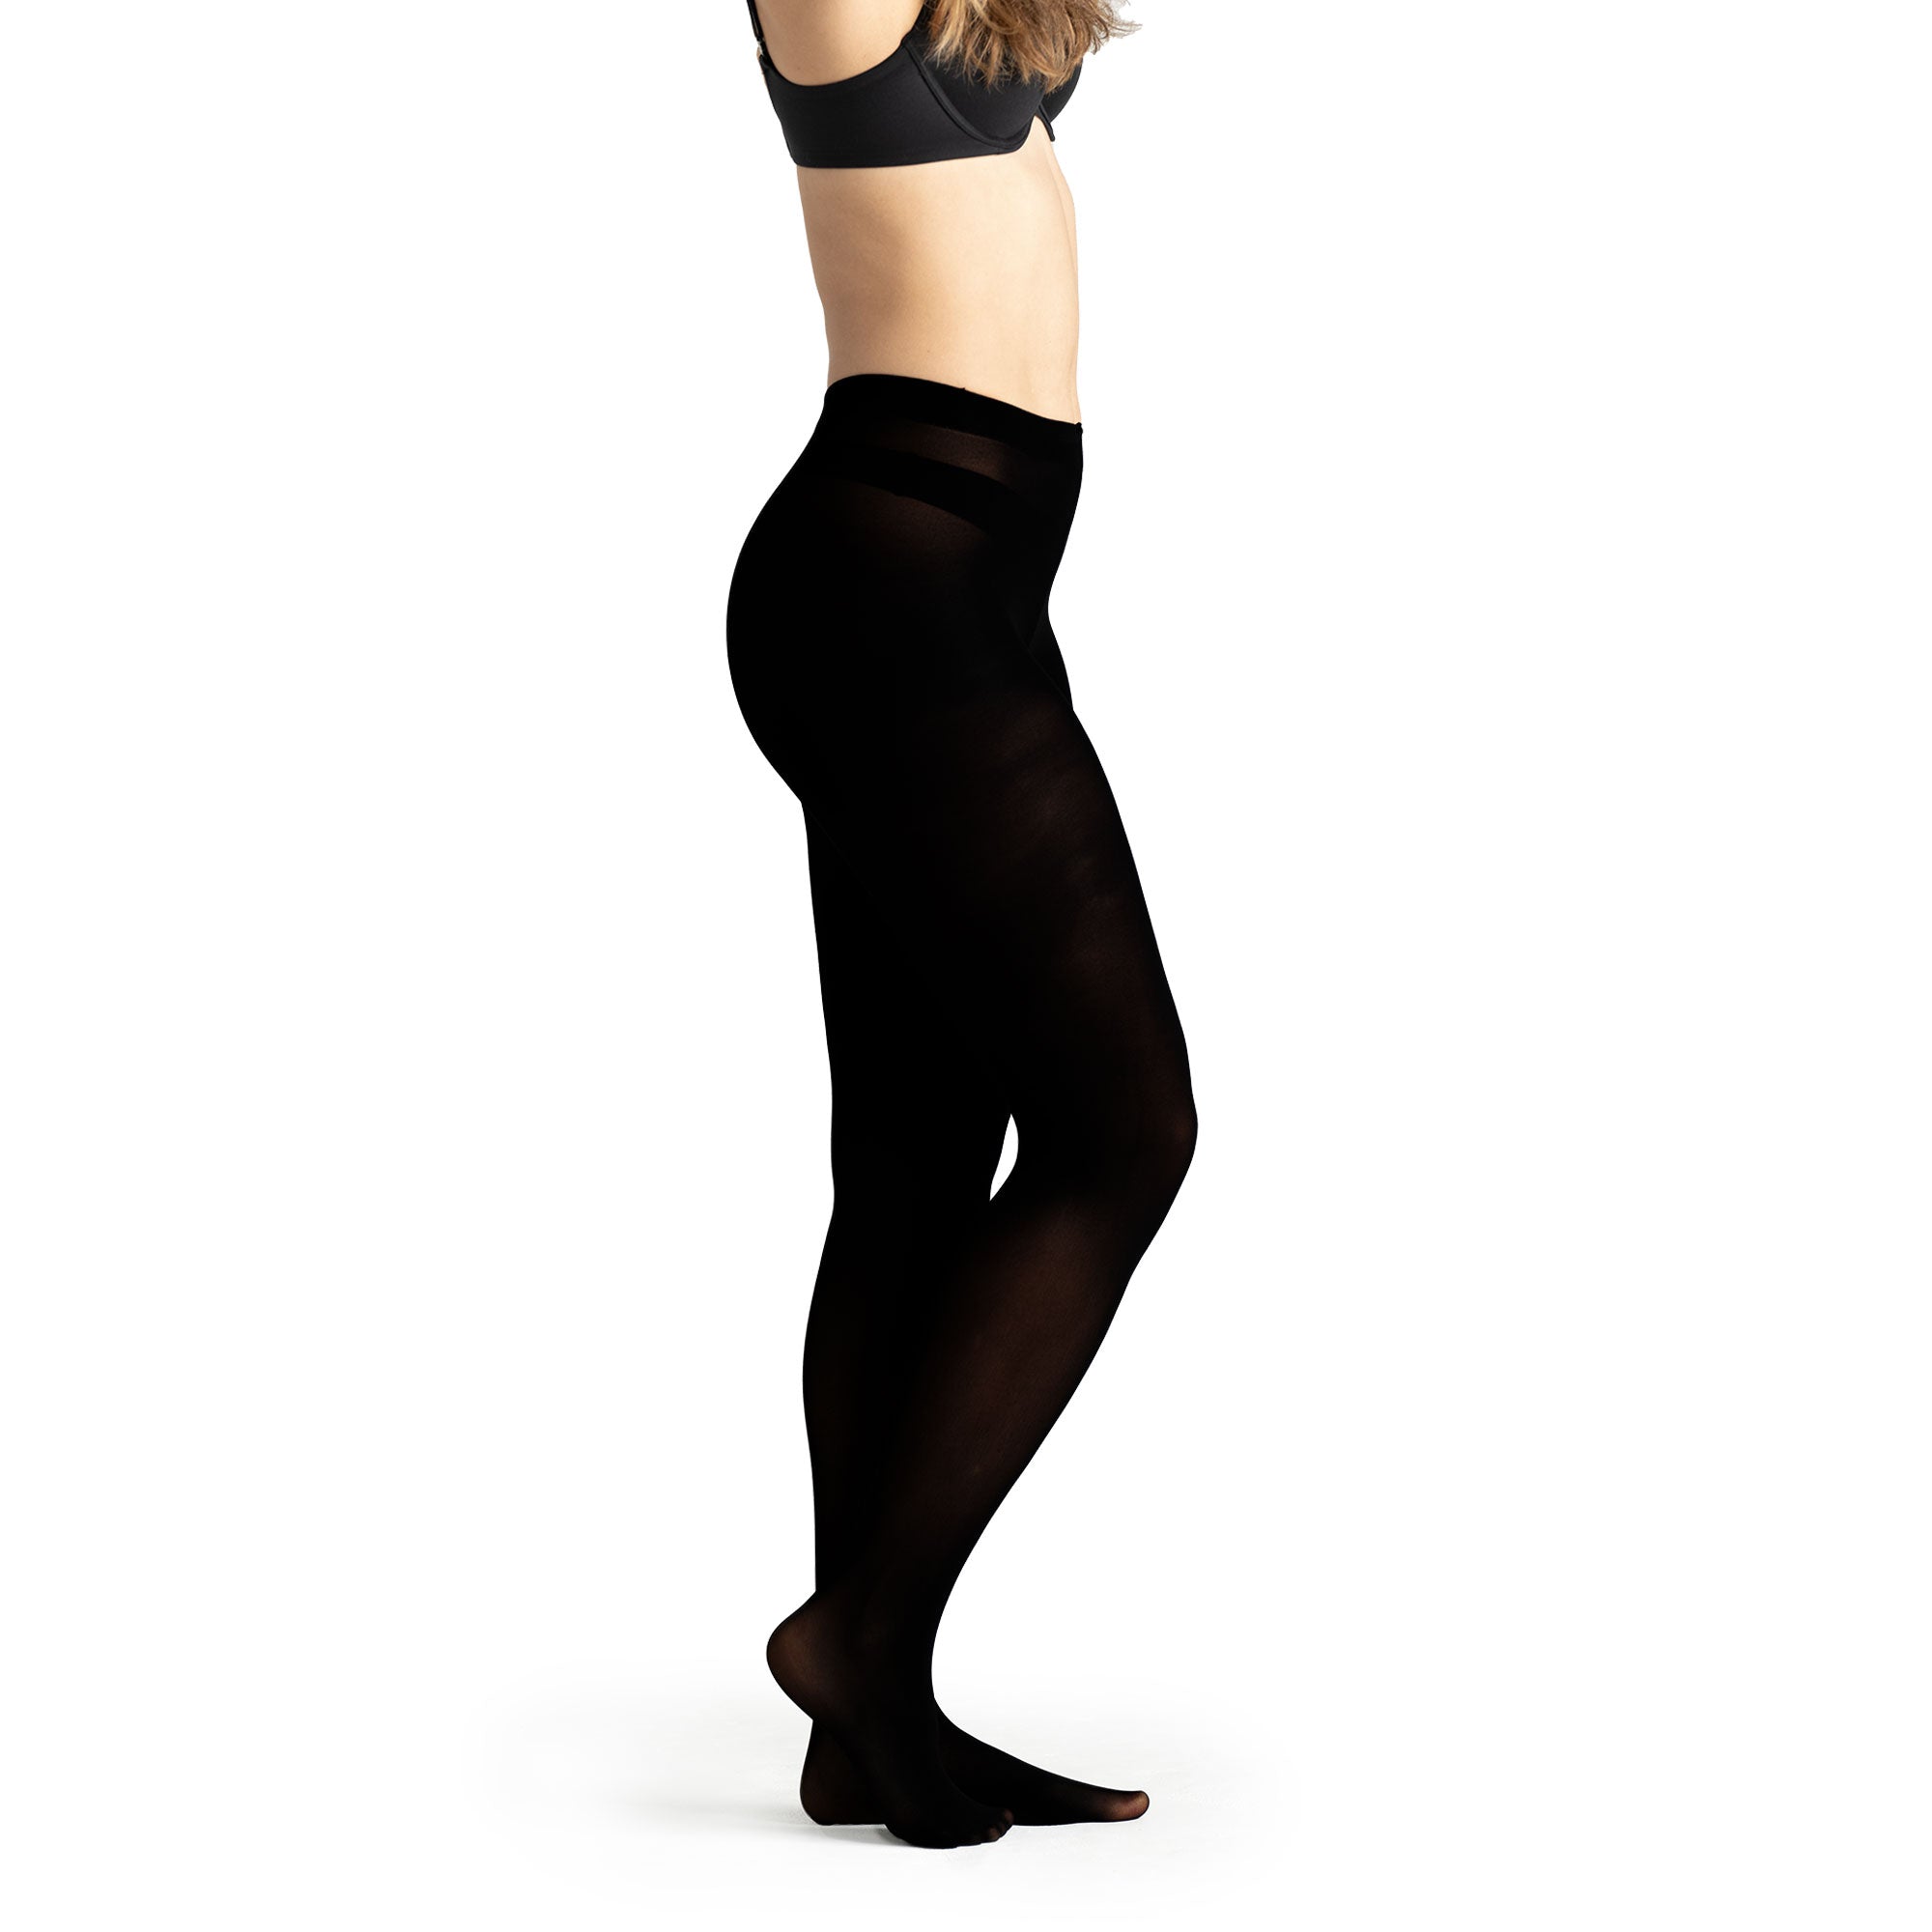 Francesca's Footed Fleece-Lined Leggings Black S/M 2PK Opaque Spandex | eBay